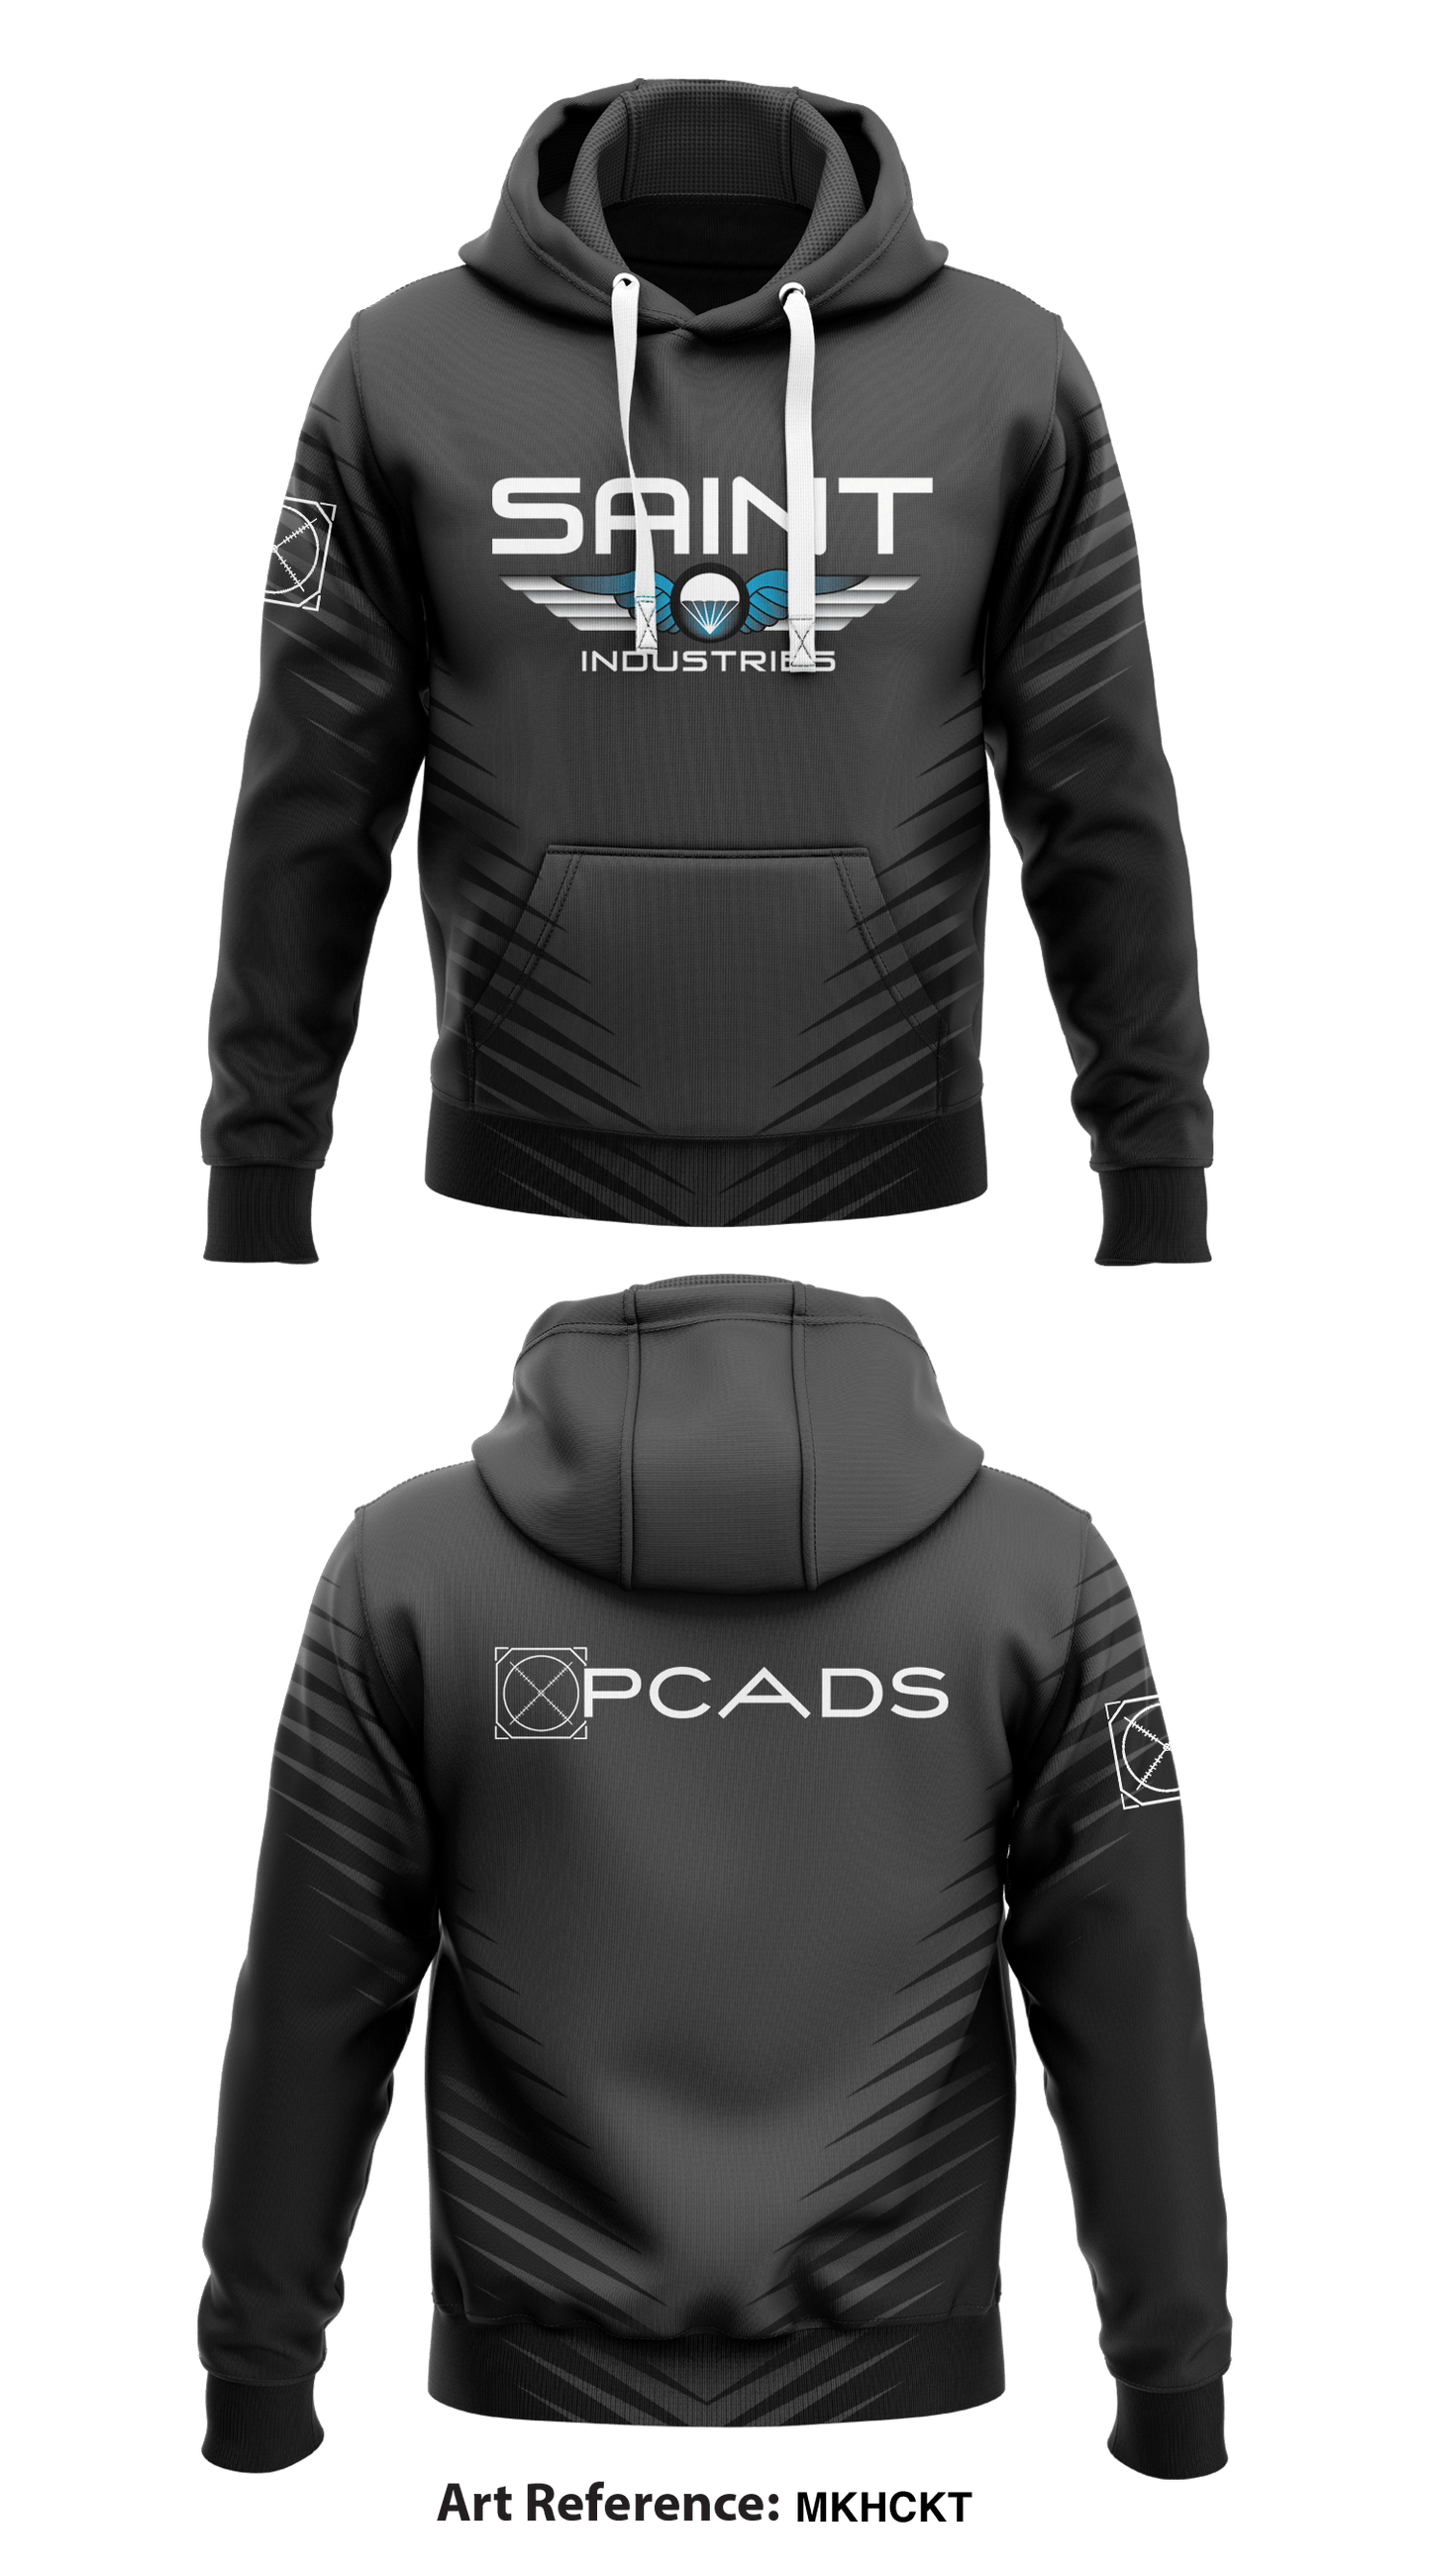 TEAM PCADS™ Store 1  Core Men's Hooded Performance Sweatshirt - mkhckt